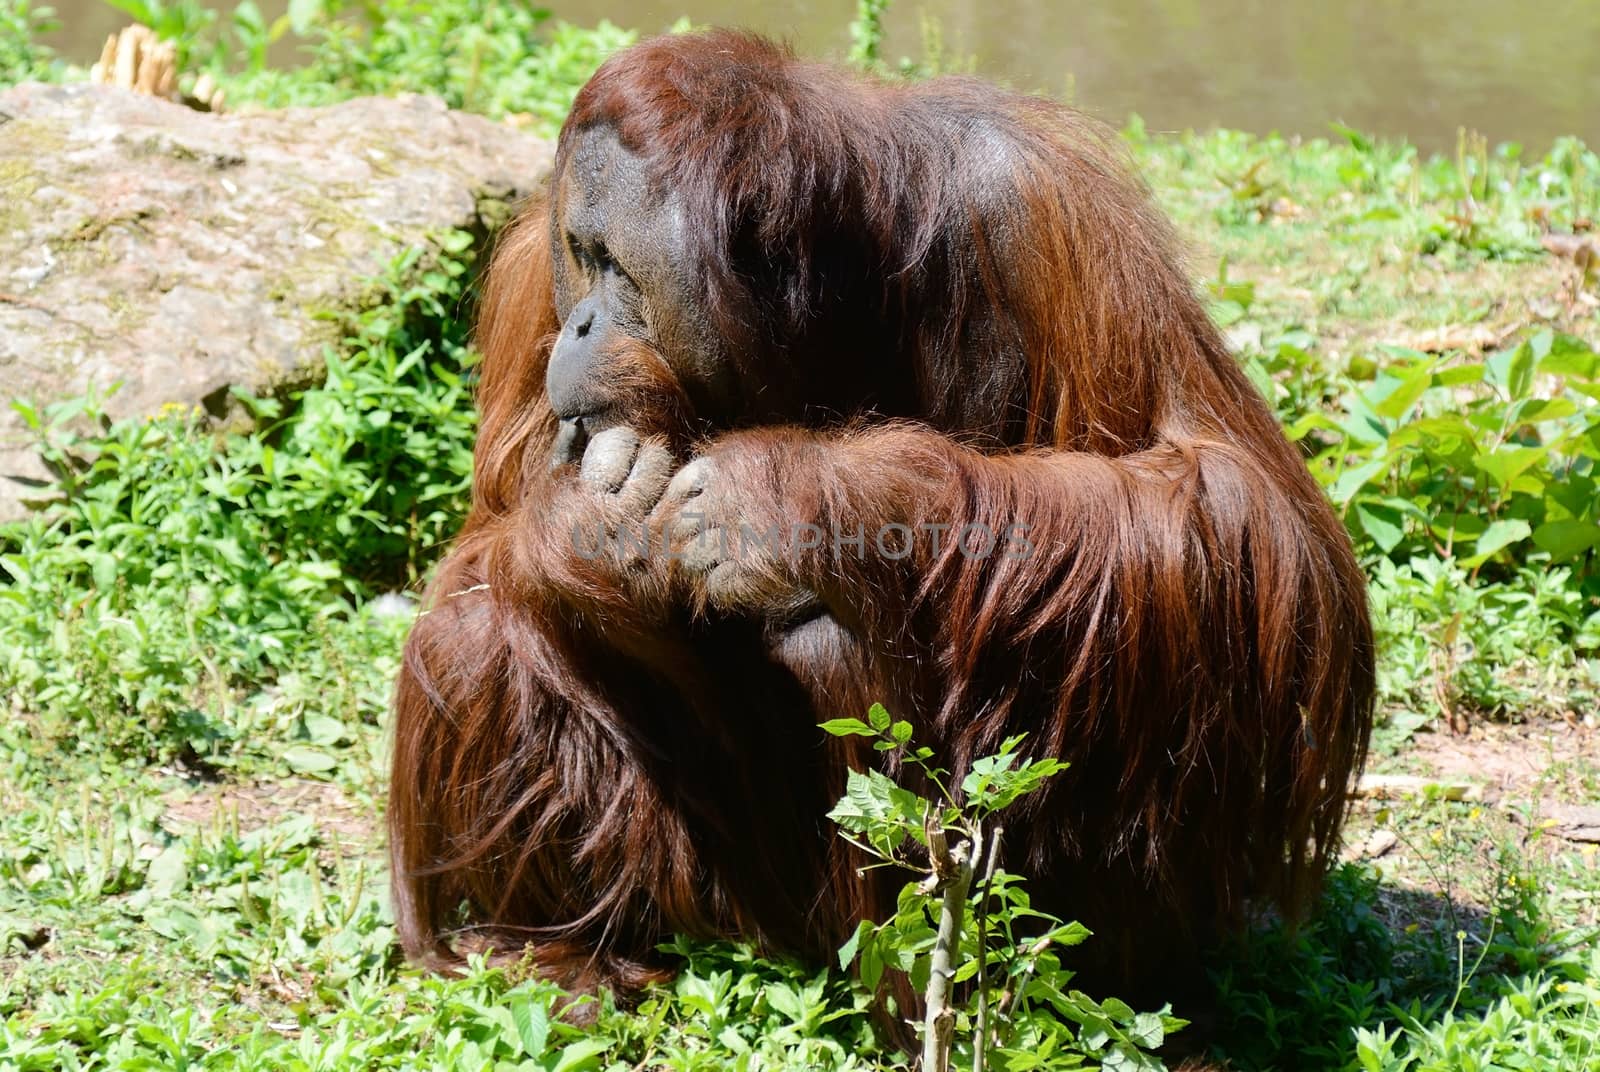 Orangutan thoughtful by kmwphotography